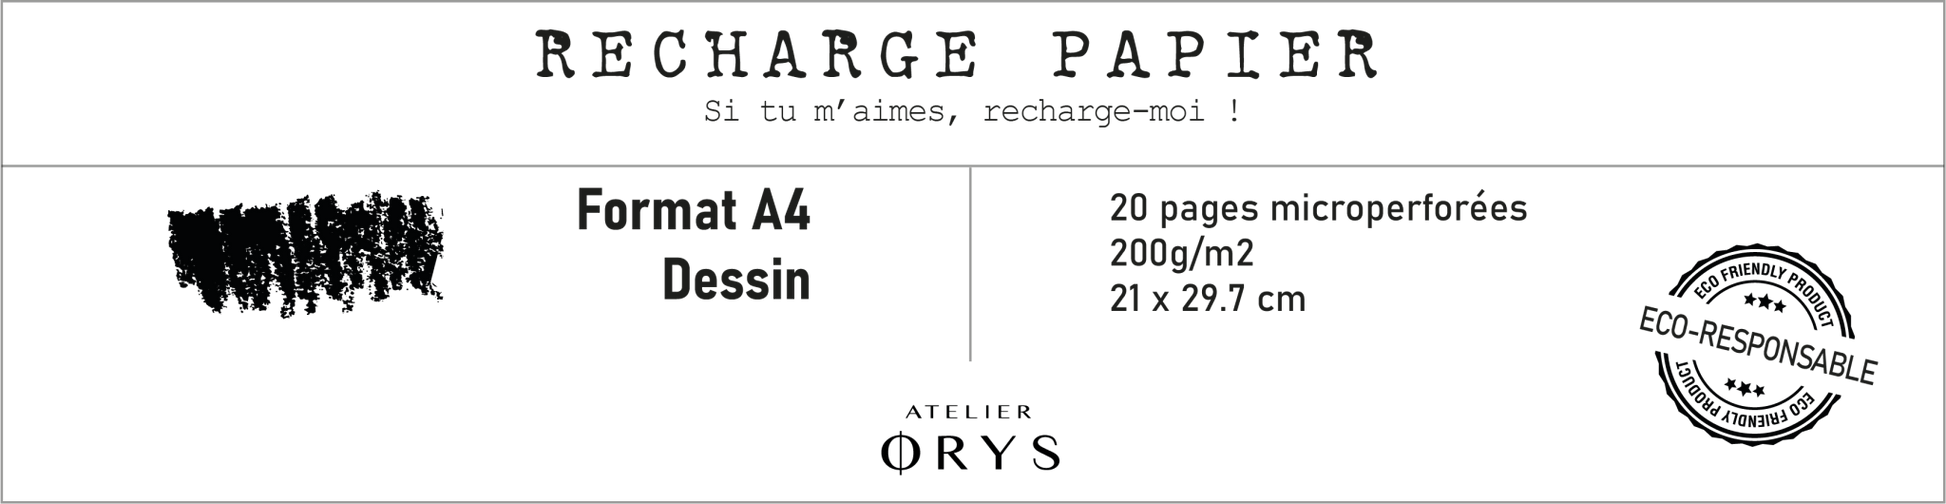 Recharge grand carnet - Dessin - Atelier ORYS